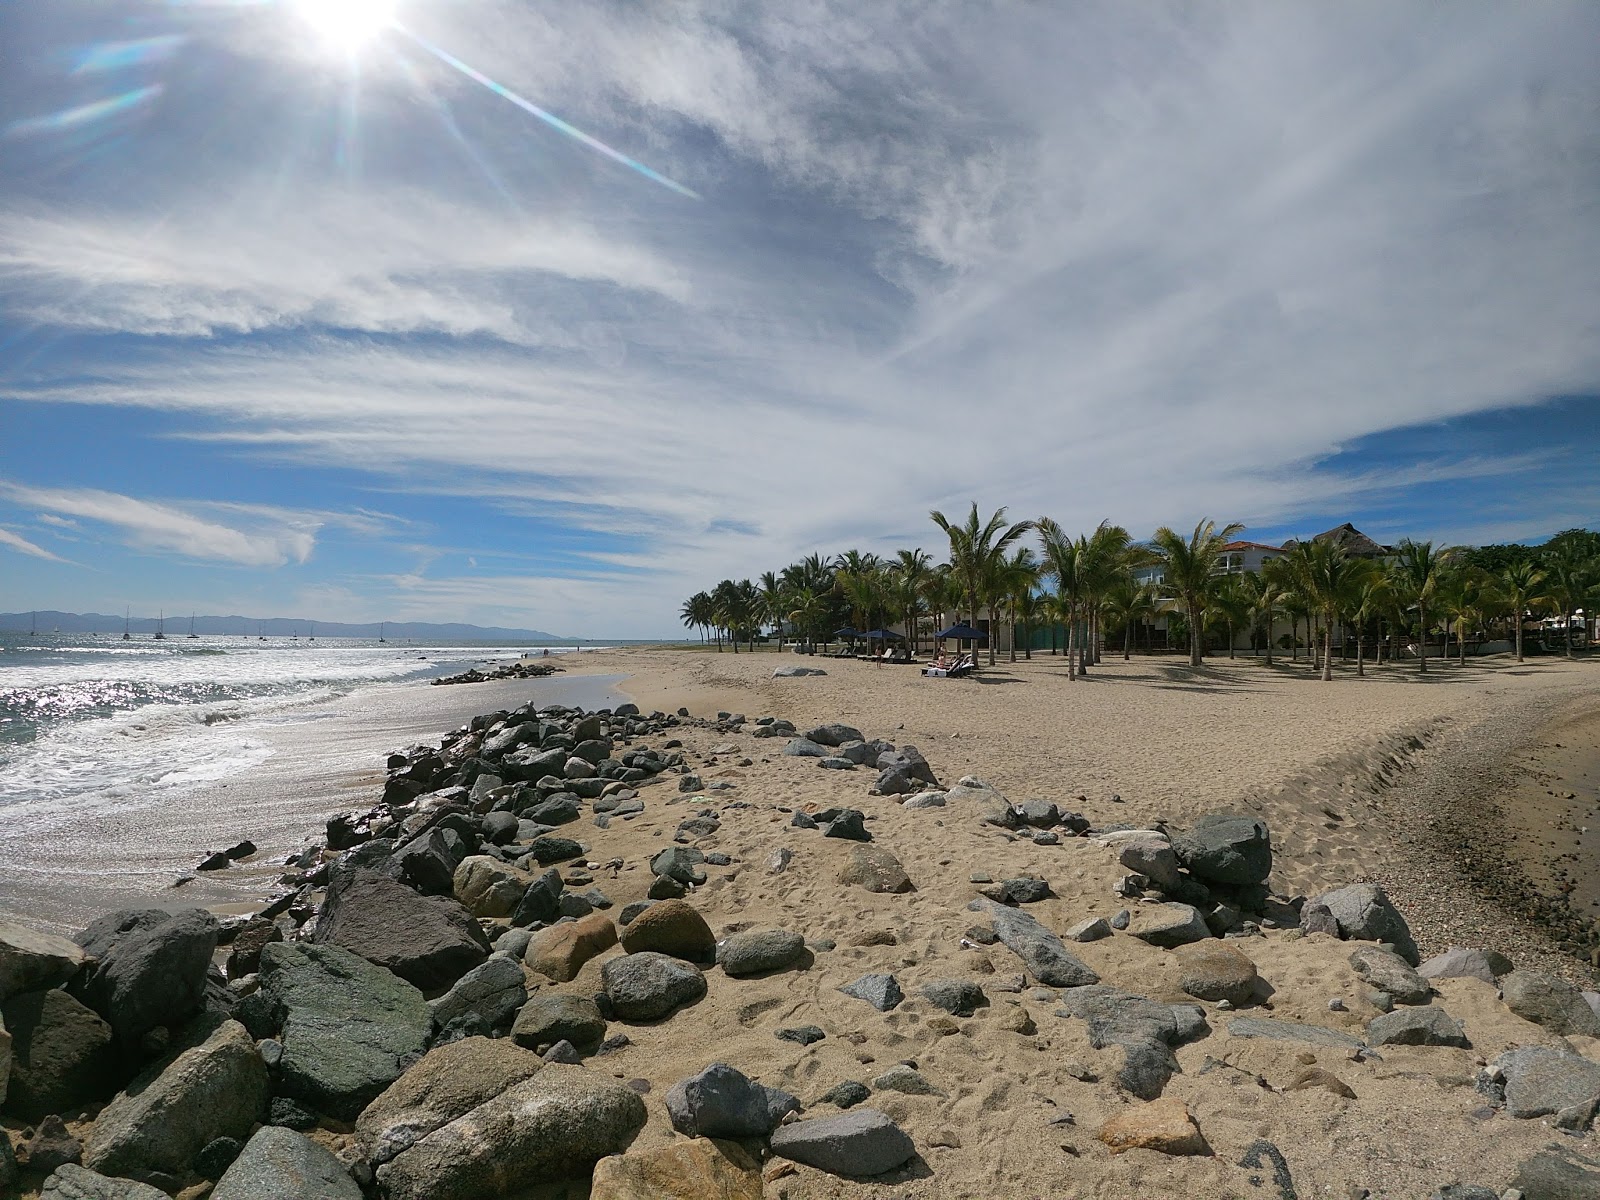 Fotografija Manzanilla beach I delno hotelsko območje